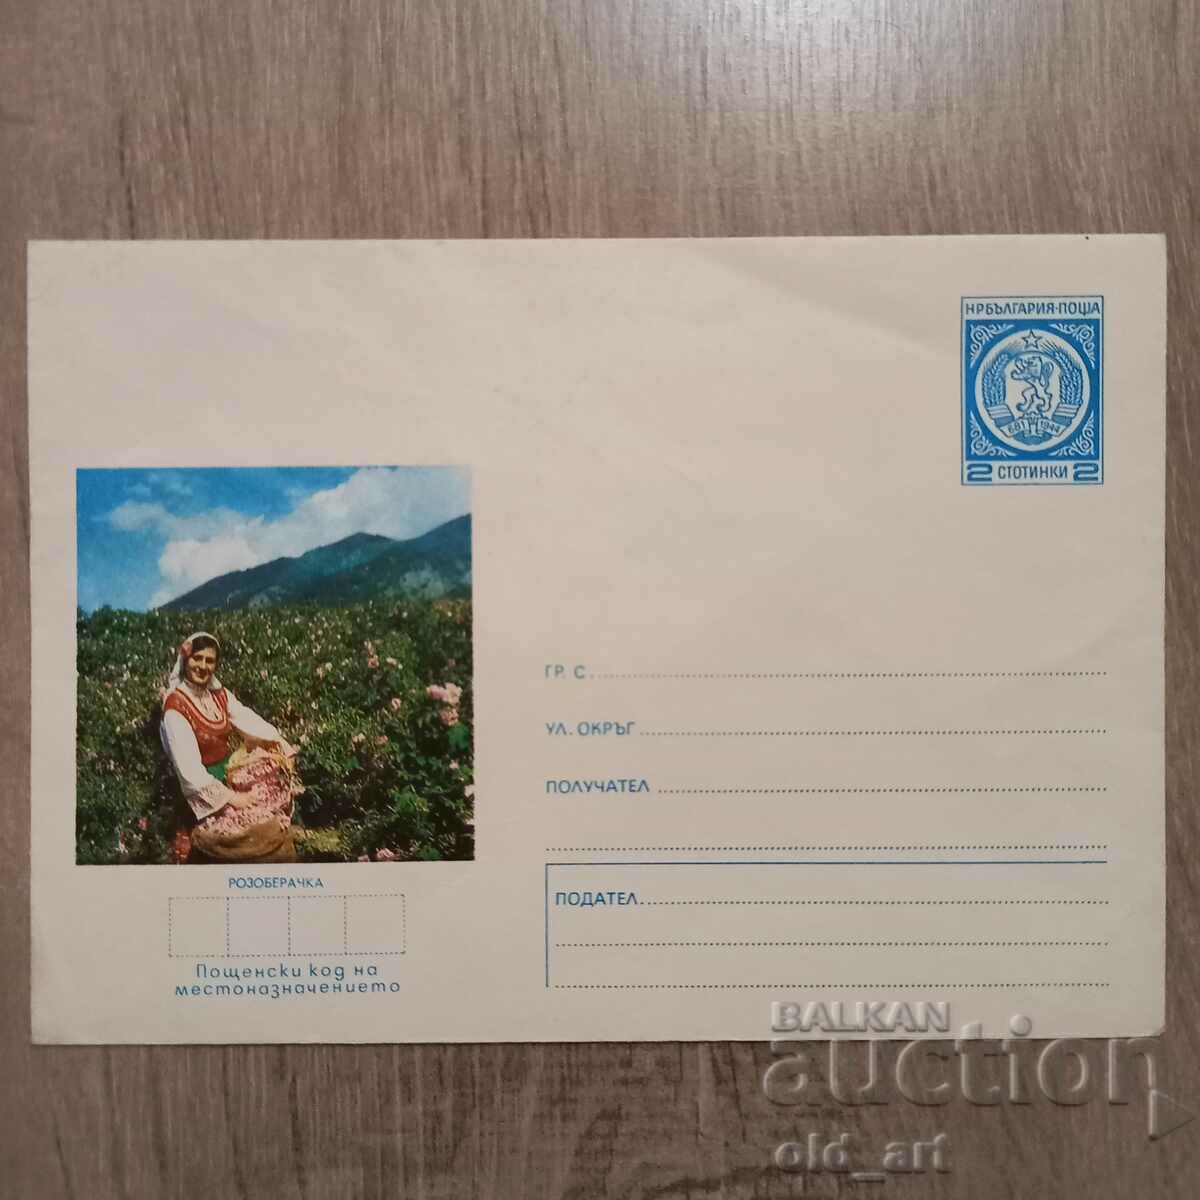 Postal envelope - Rose picker